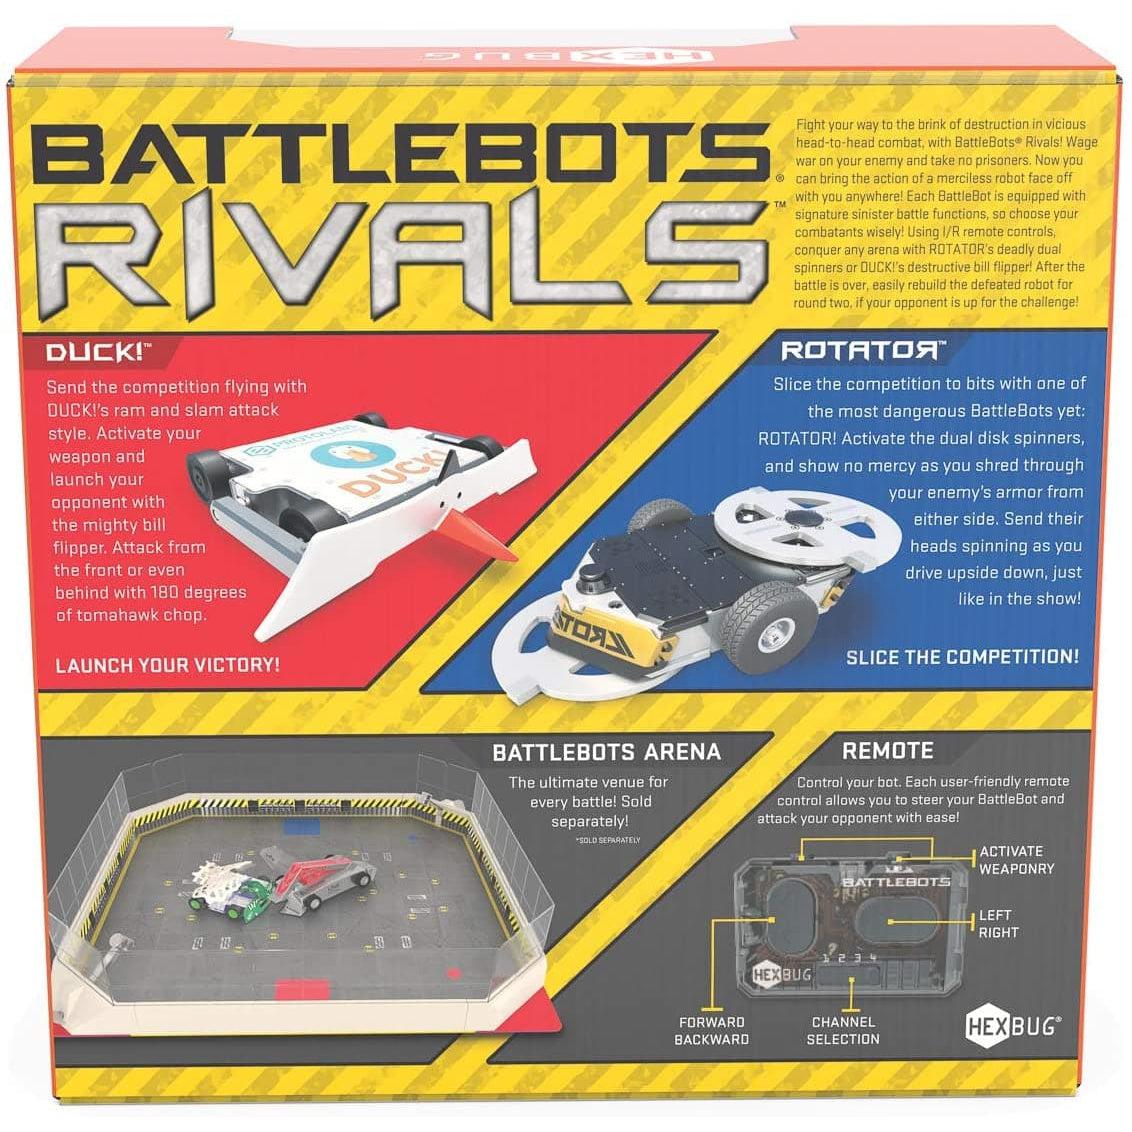 Spin Master-Battlebots Rivals 5.0 - Duck vs. Rotator-413-6984-Legacy Toys